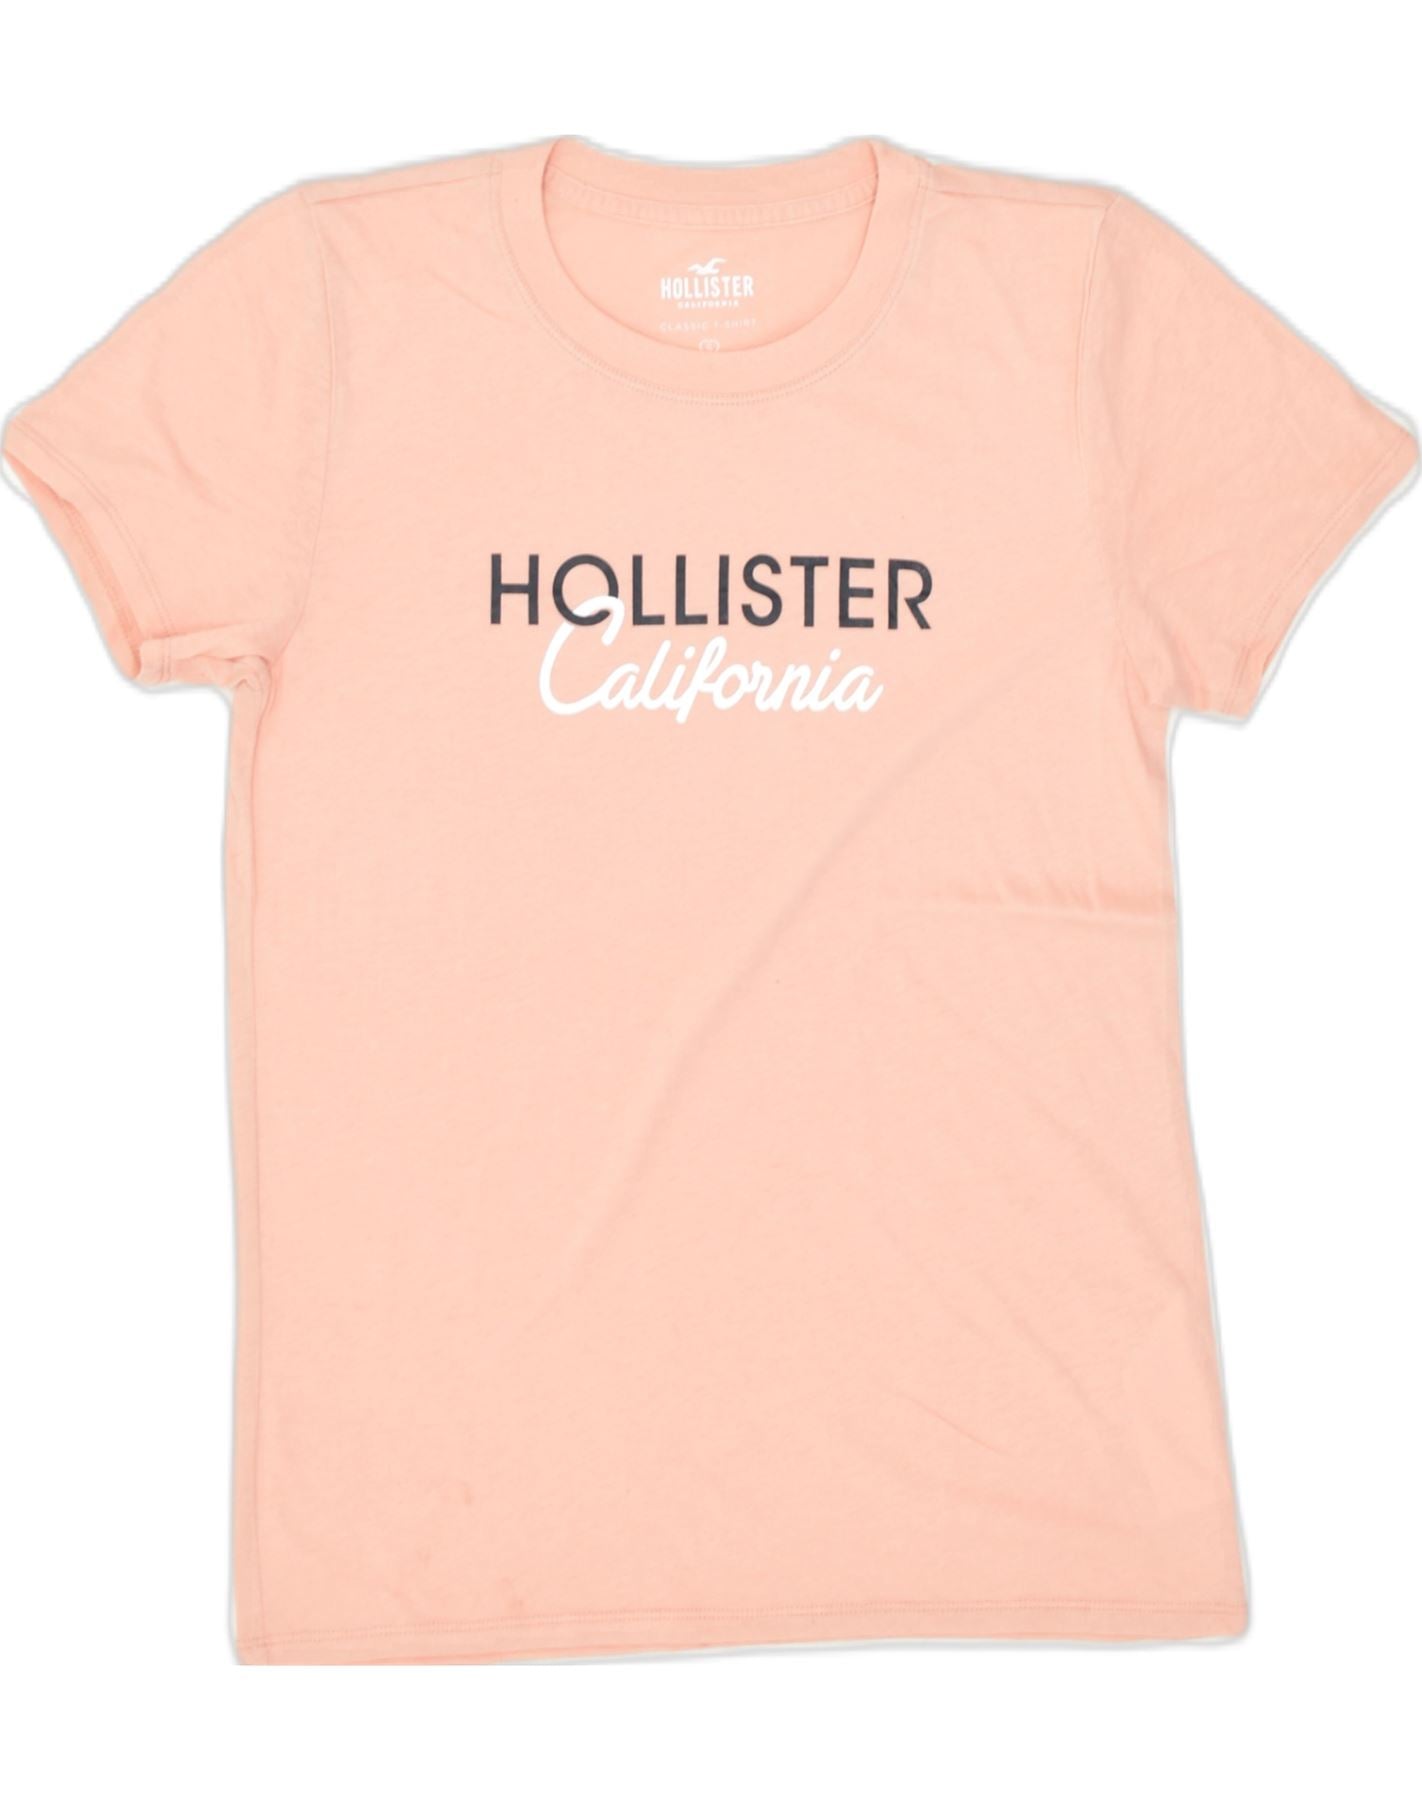 HOLLISTER Womens California Graphic T-Shirt Top UK 14 Large Navy Blue